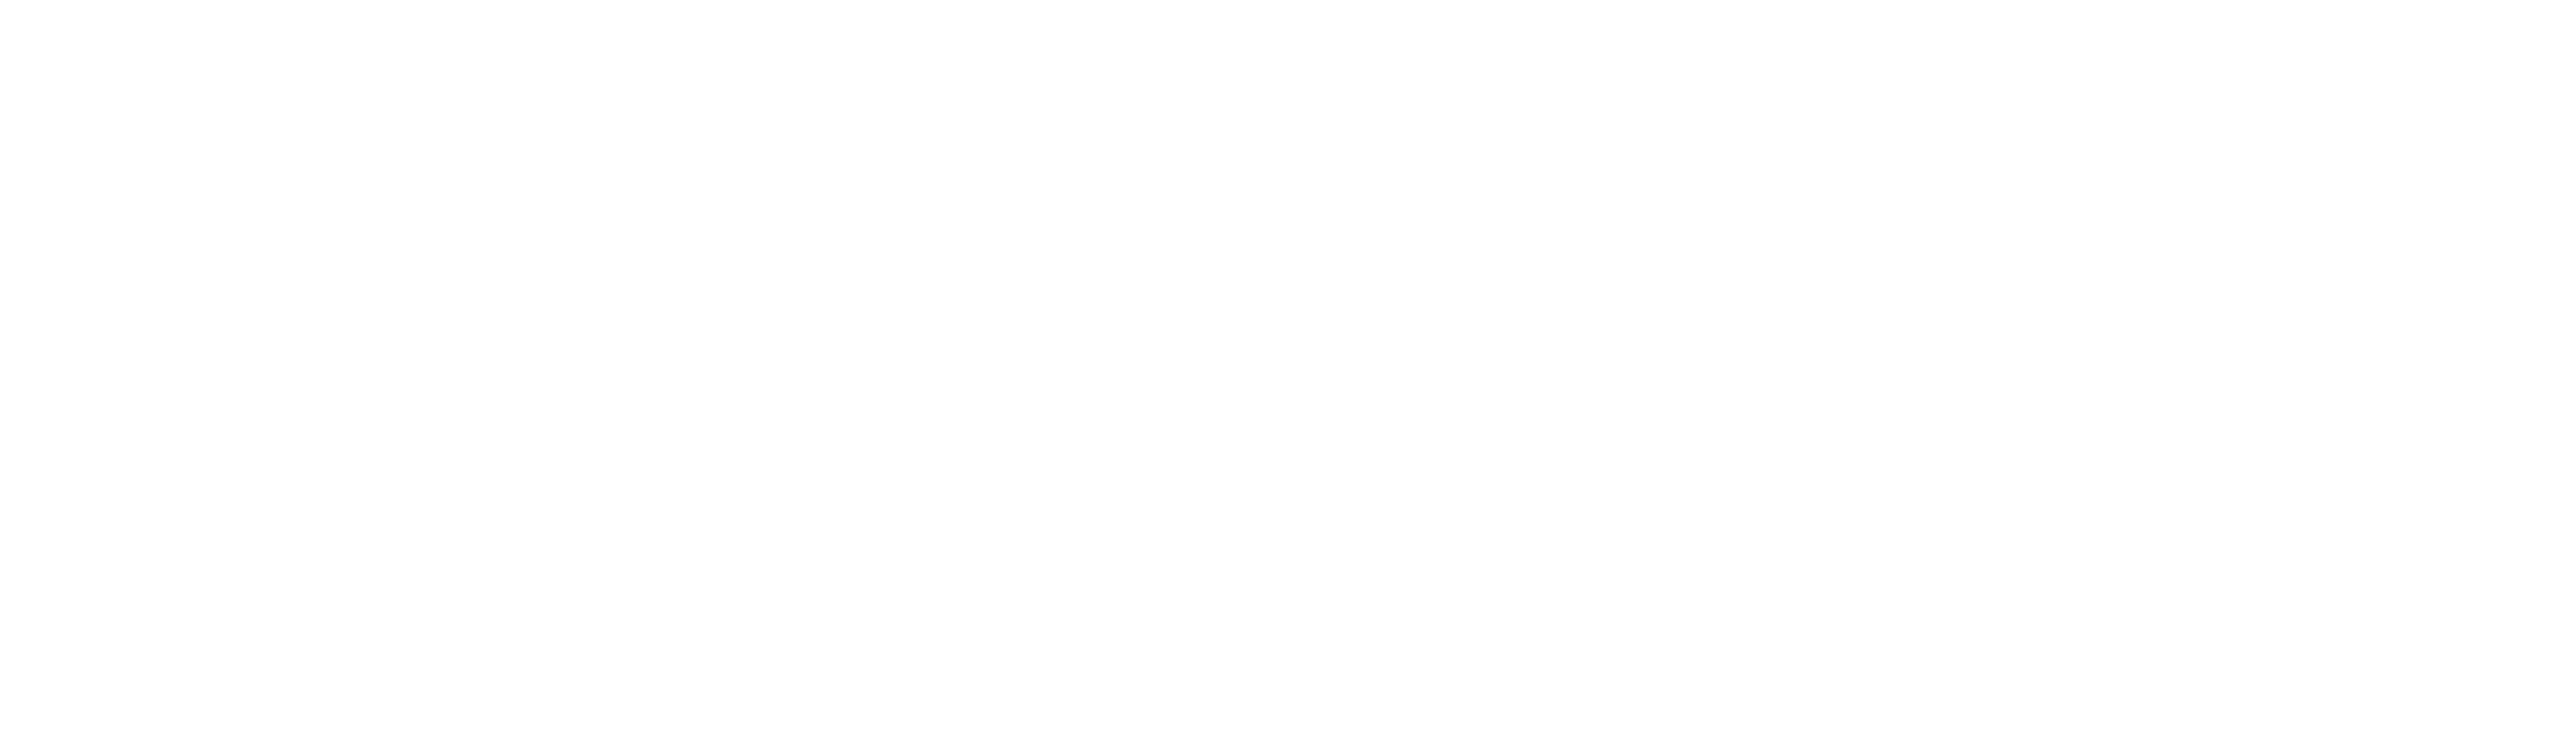 God's Country logo